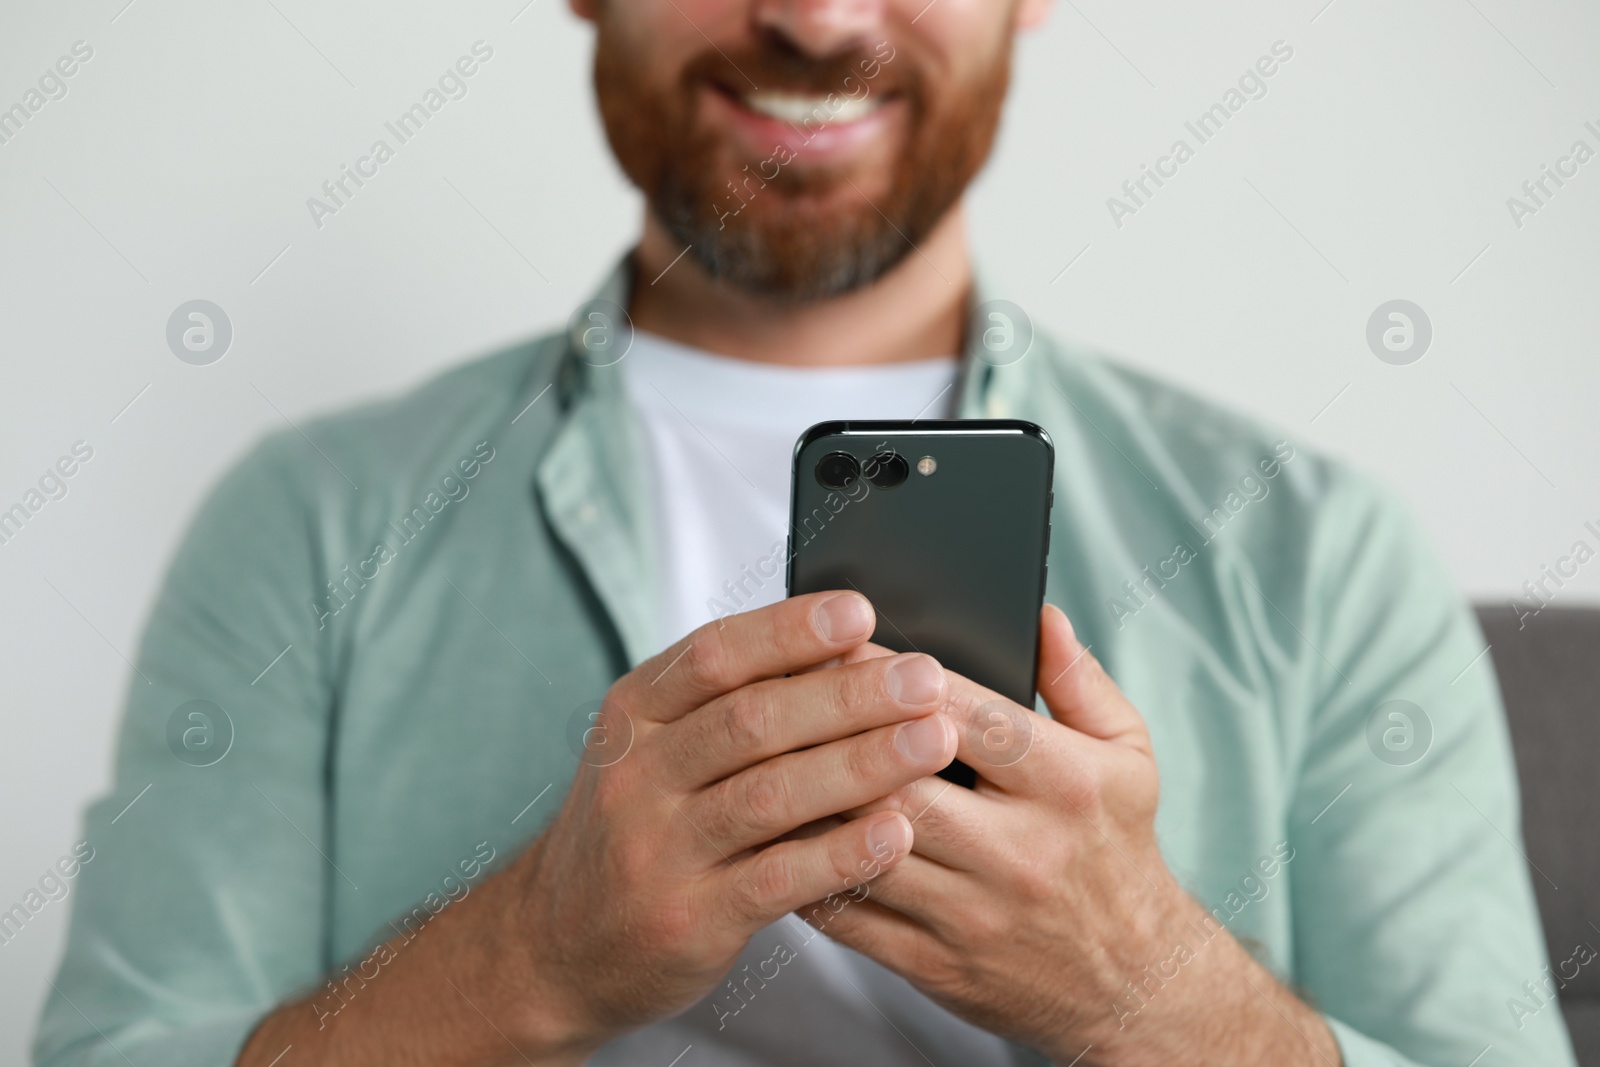 Photo of Man using smartphone at home, closeup view